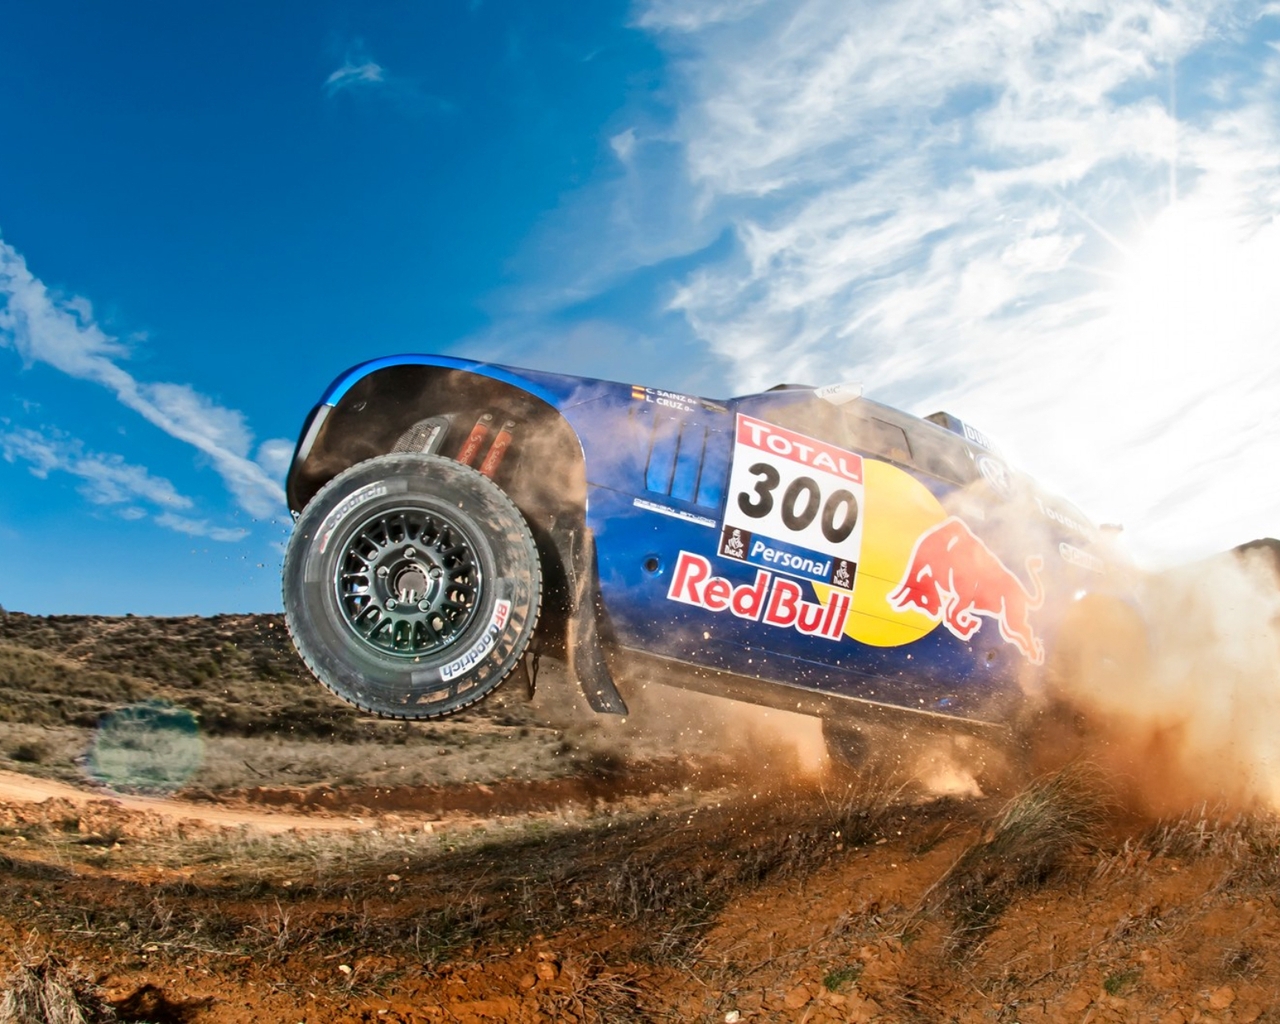 Volkswagen Dakar Race for 1280 x 1024 resolution